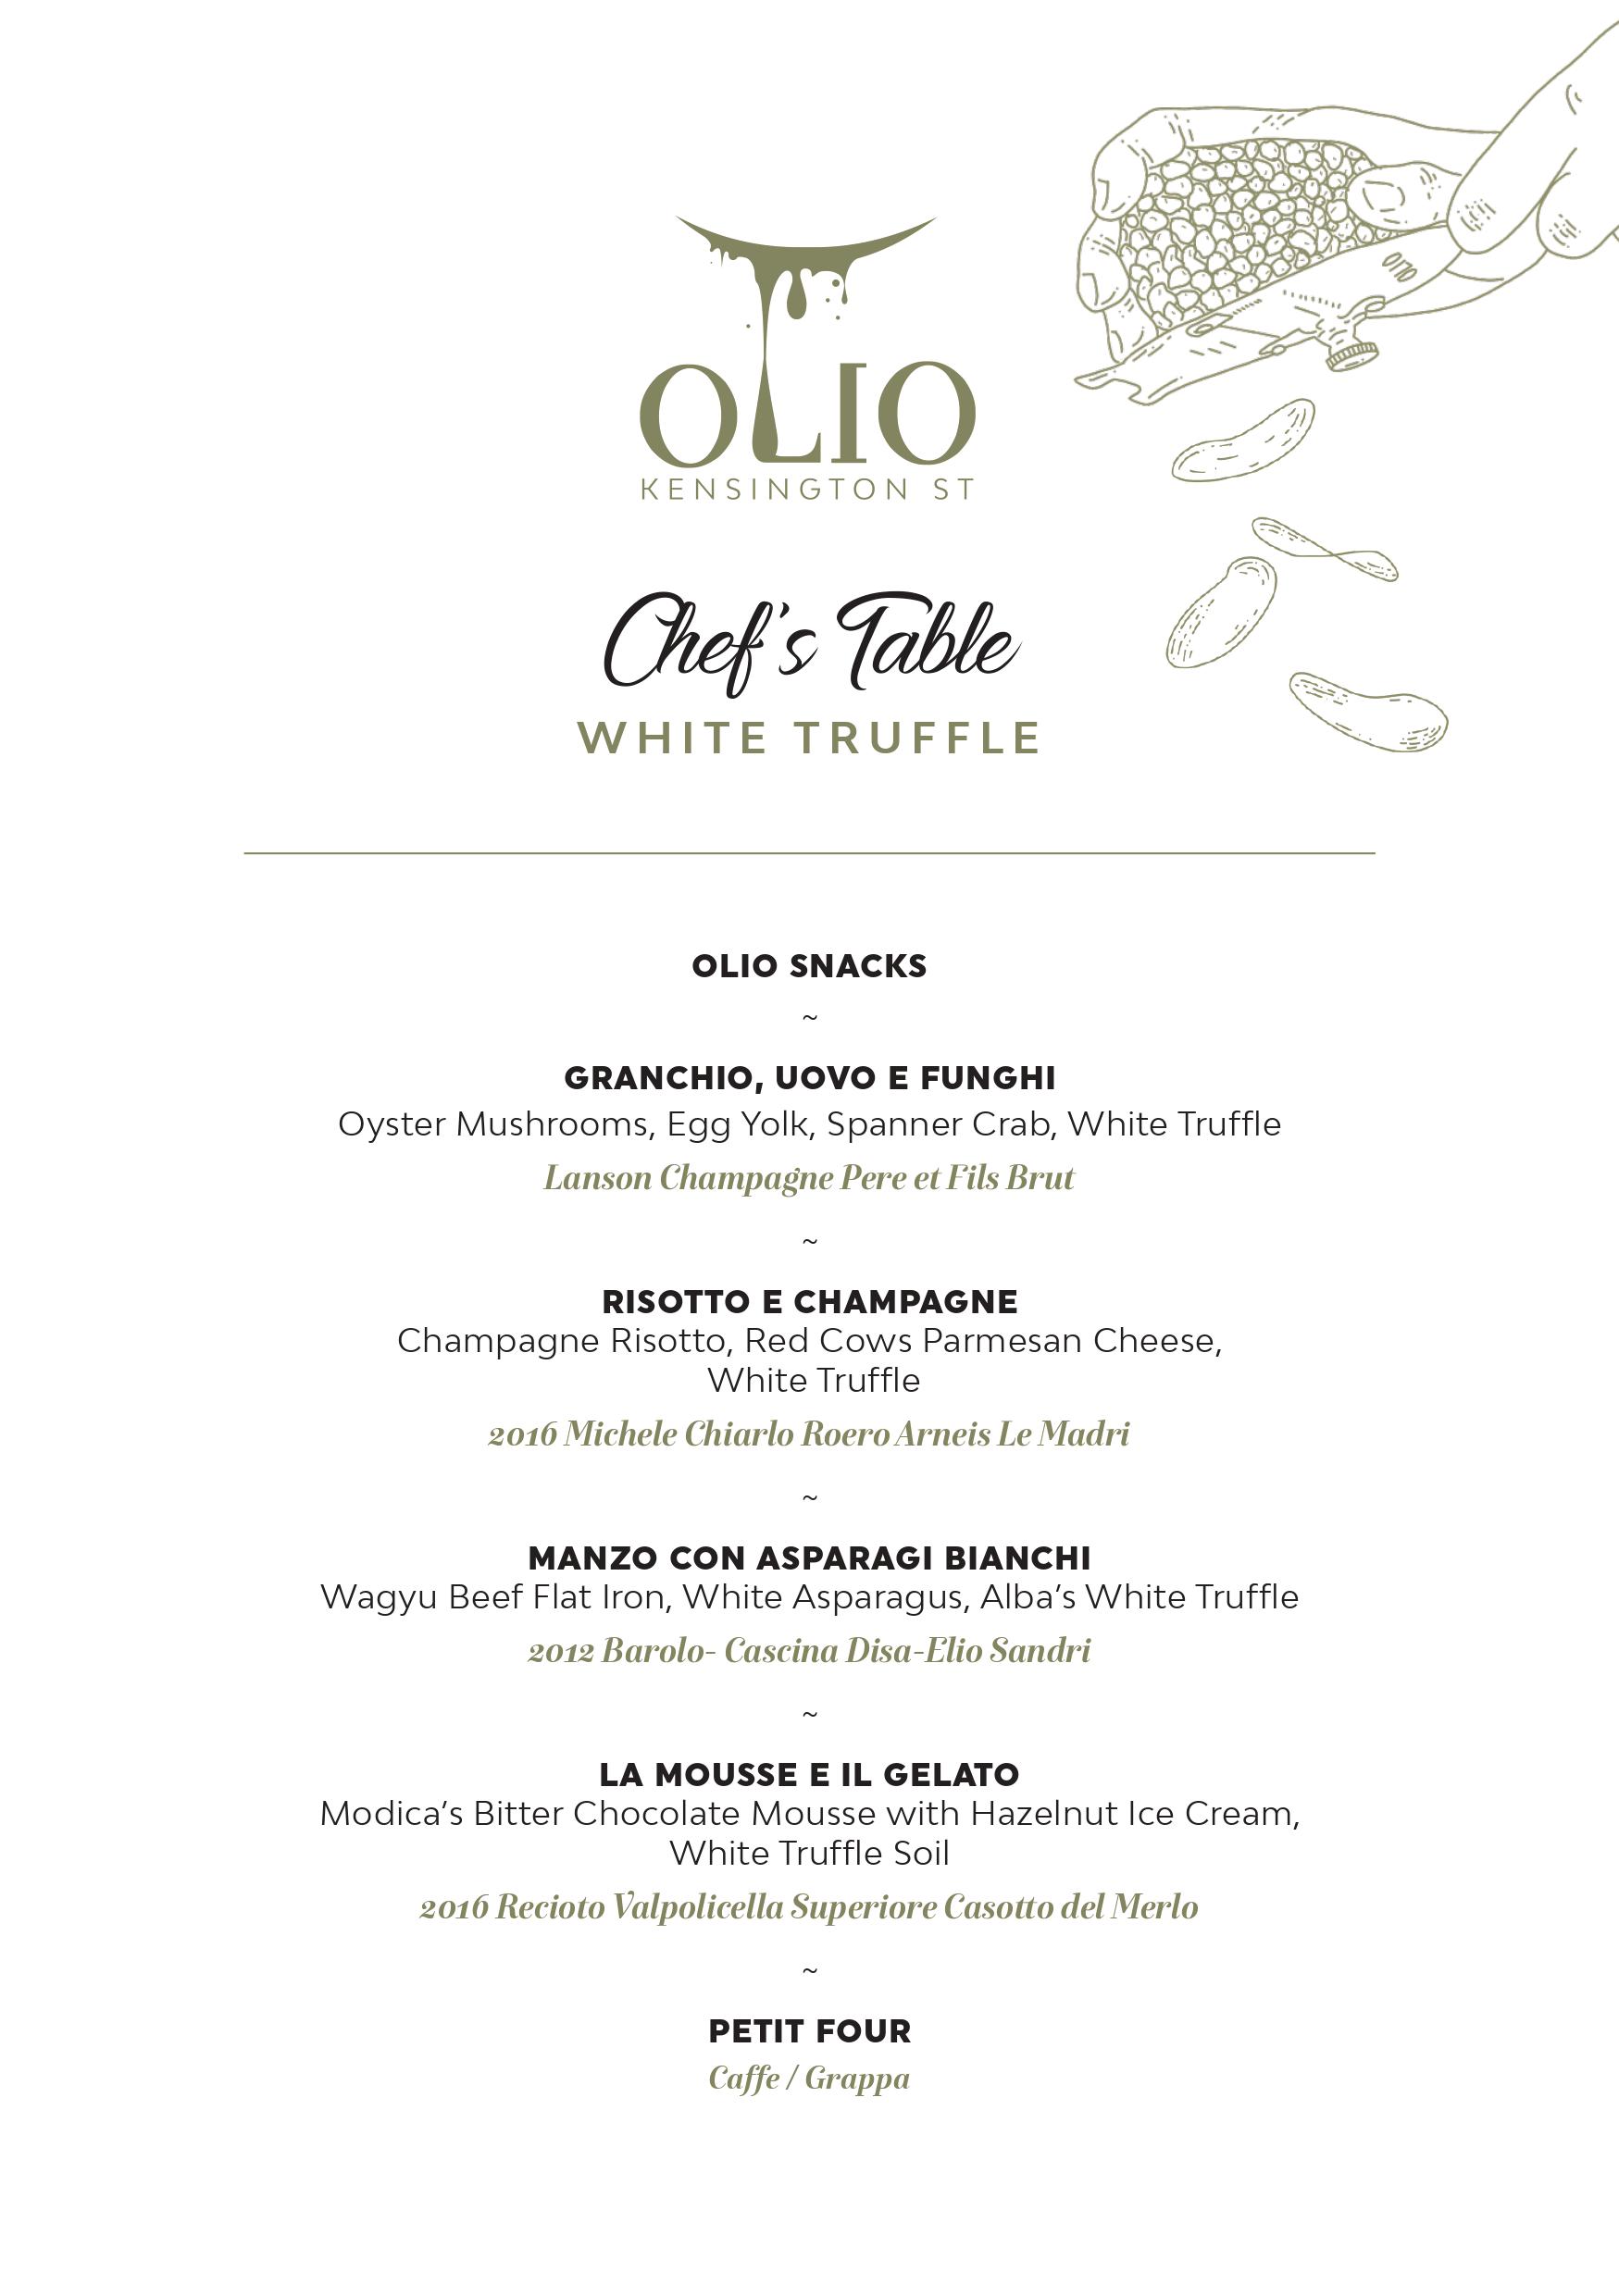 Chefs Table Olio series - white truffle dinner menu